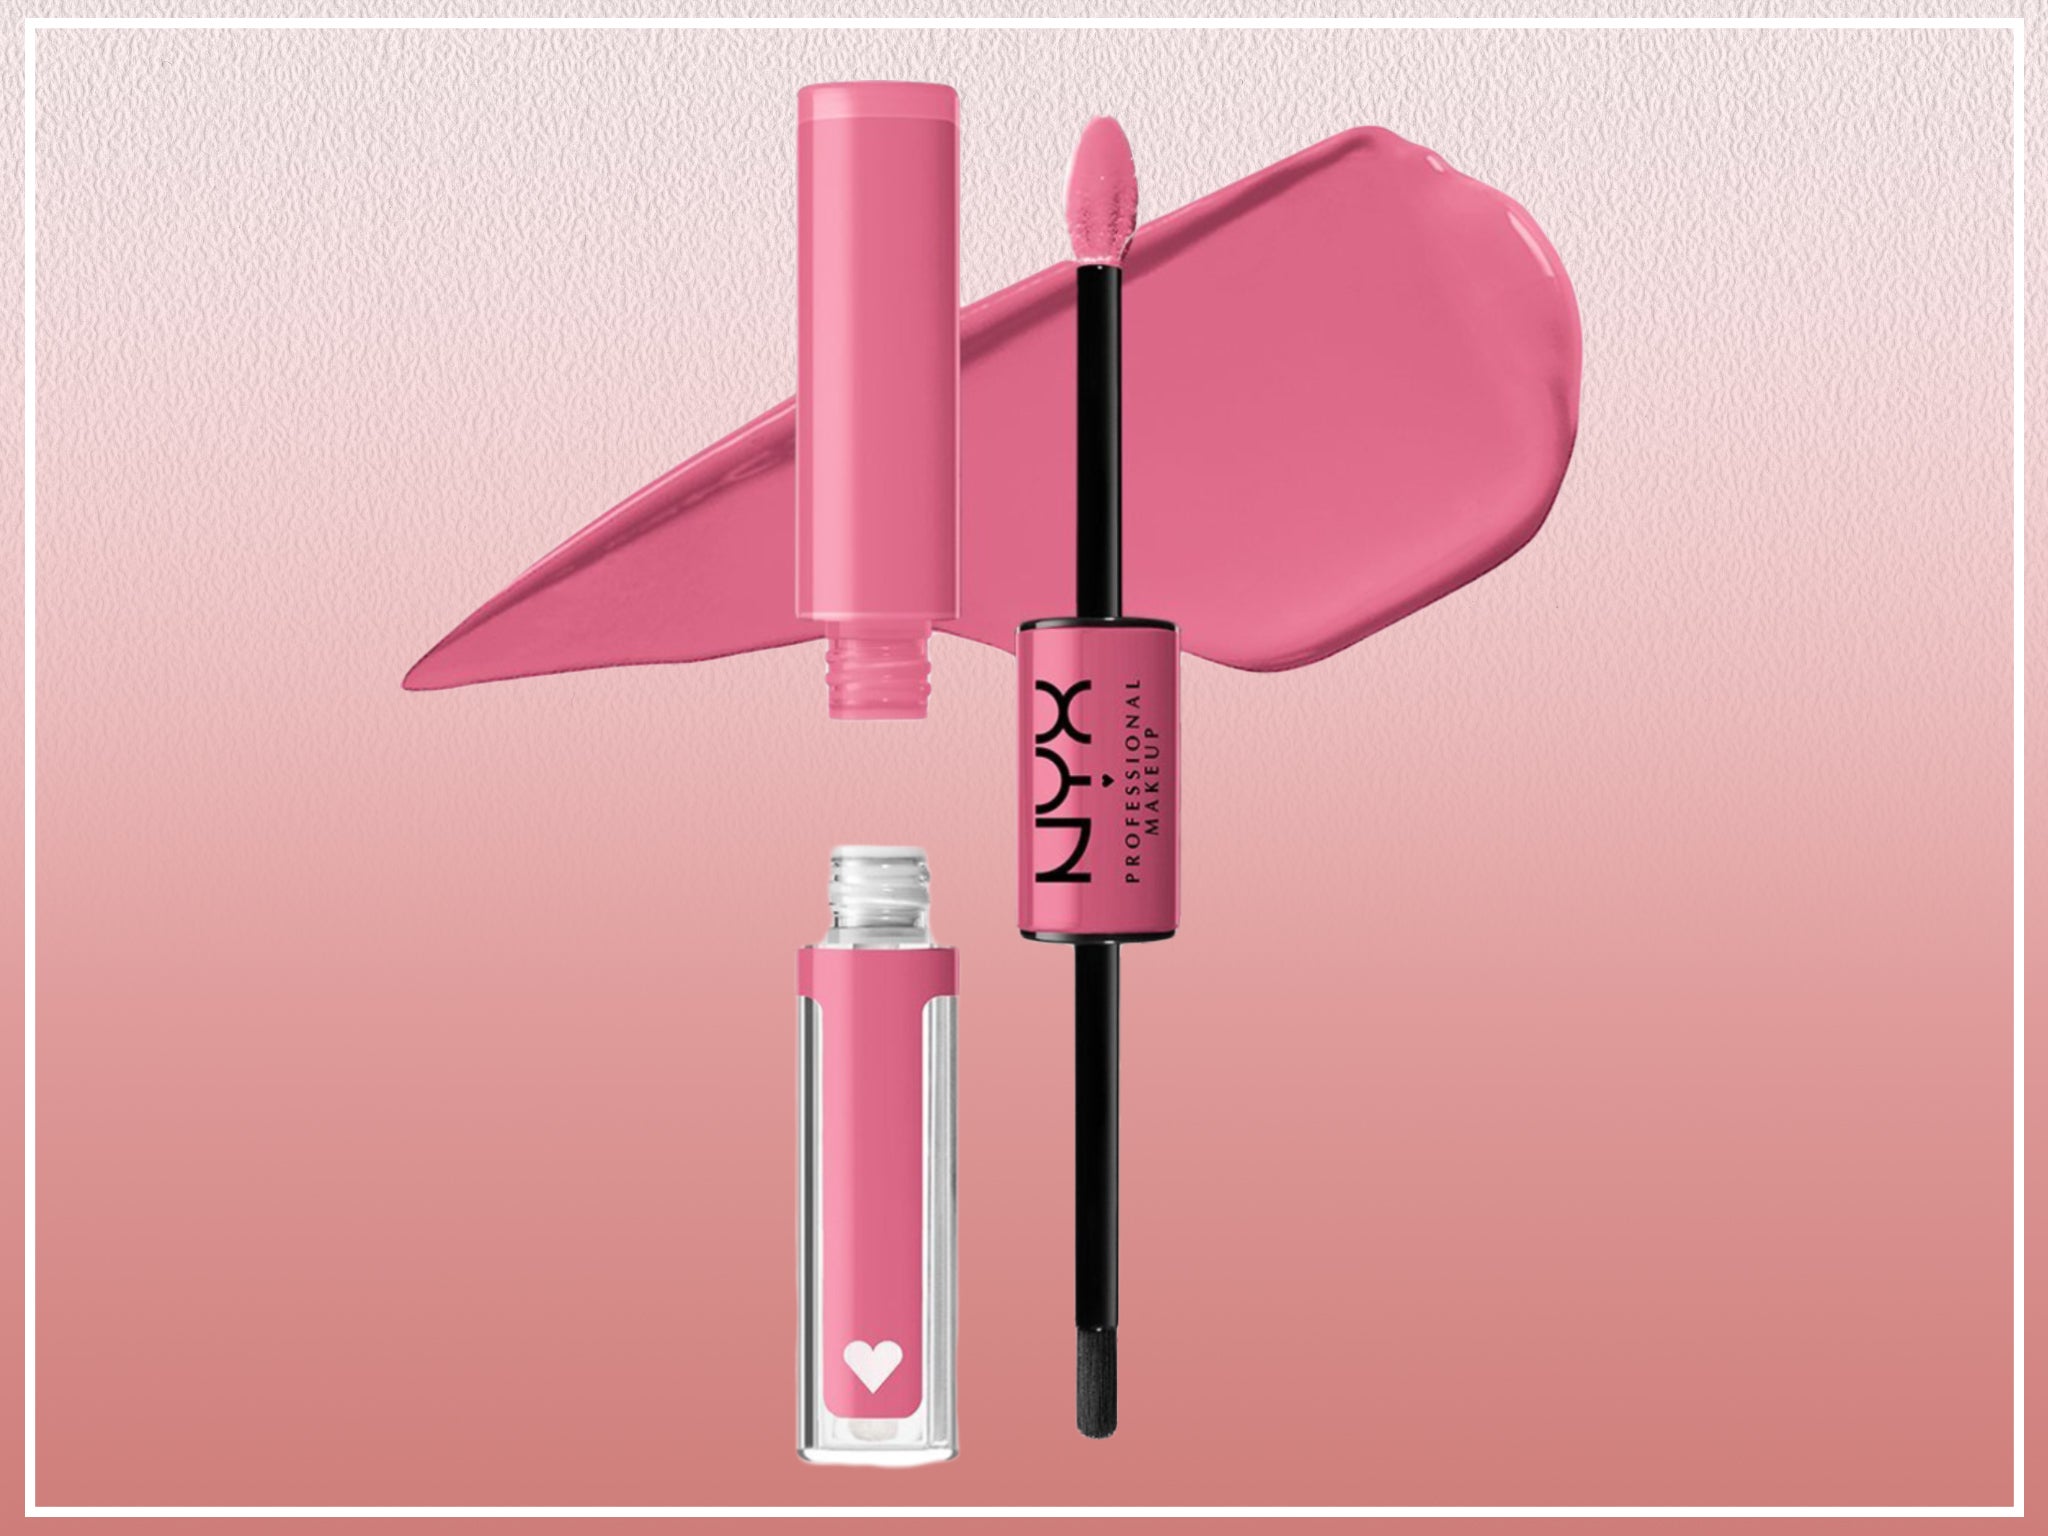 NYX Cosmetics’s shine loud lipstick promises 16-hour wear